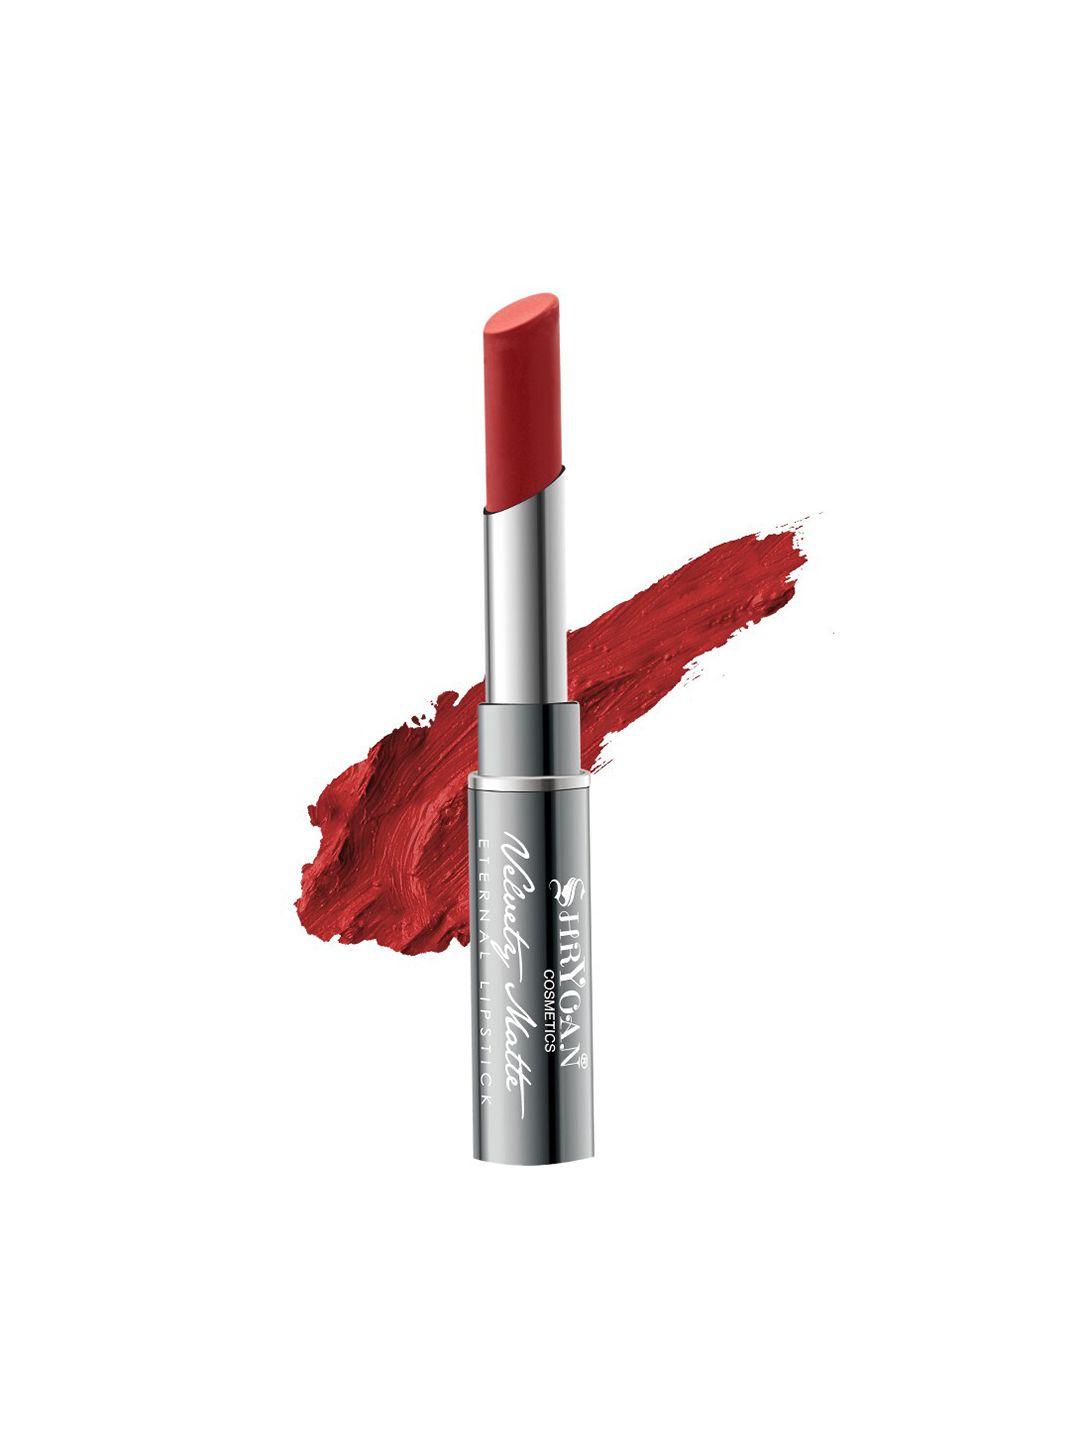 shryoan velvety matte eternal lipstick 3.8g - red boomerang